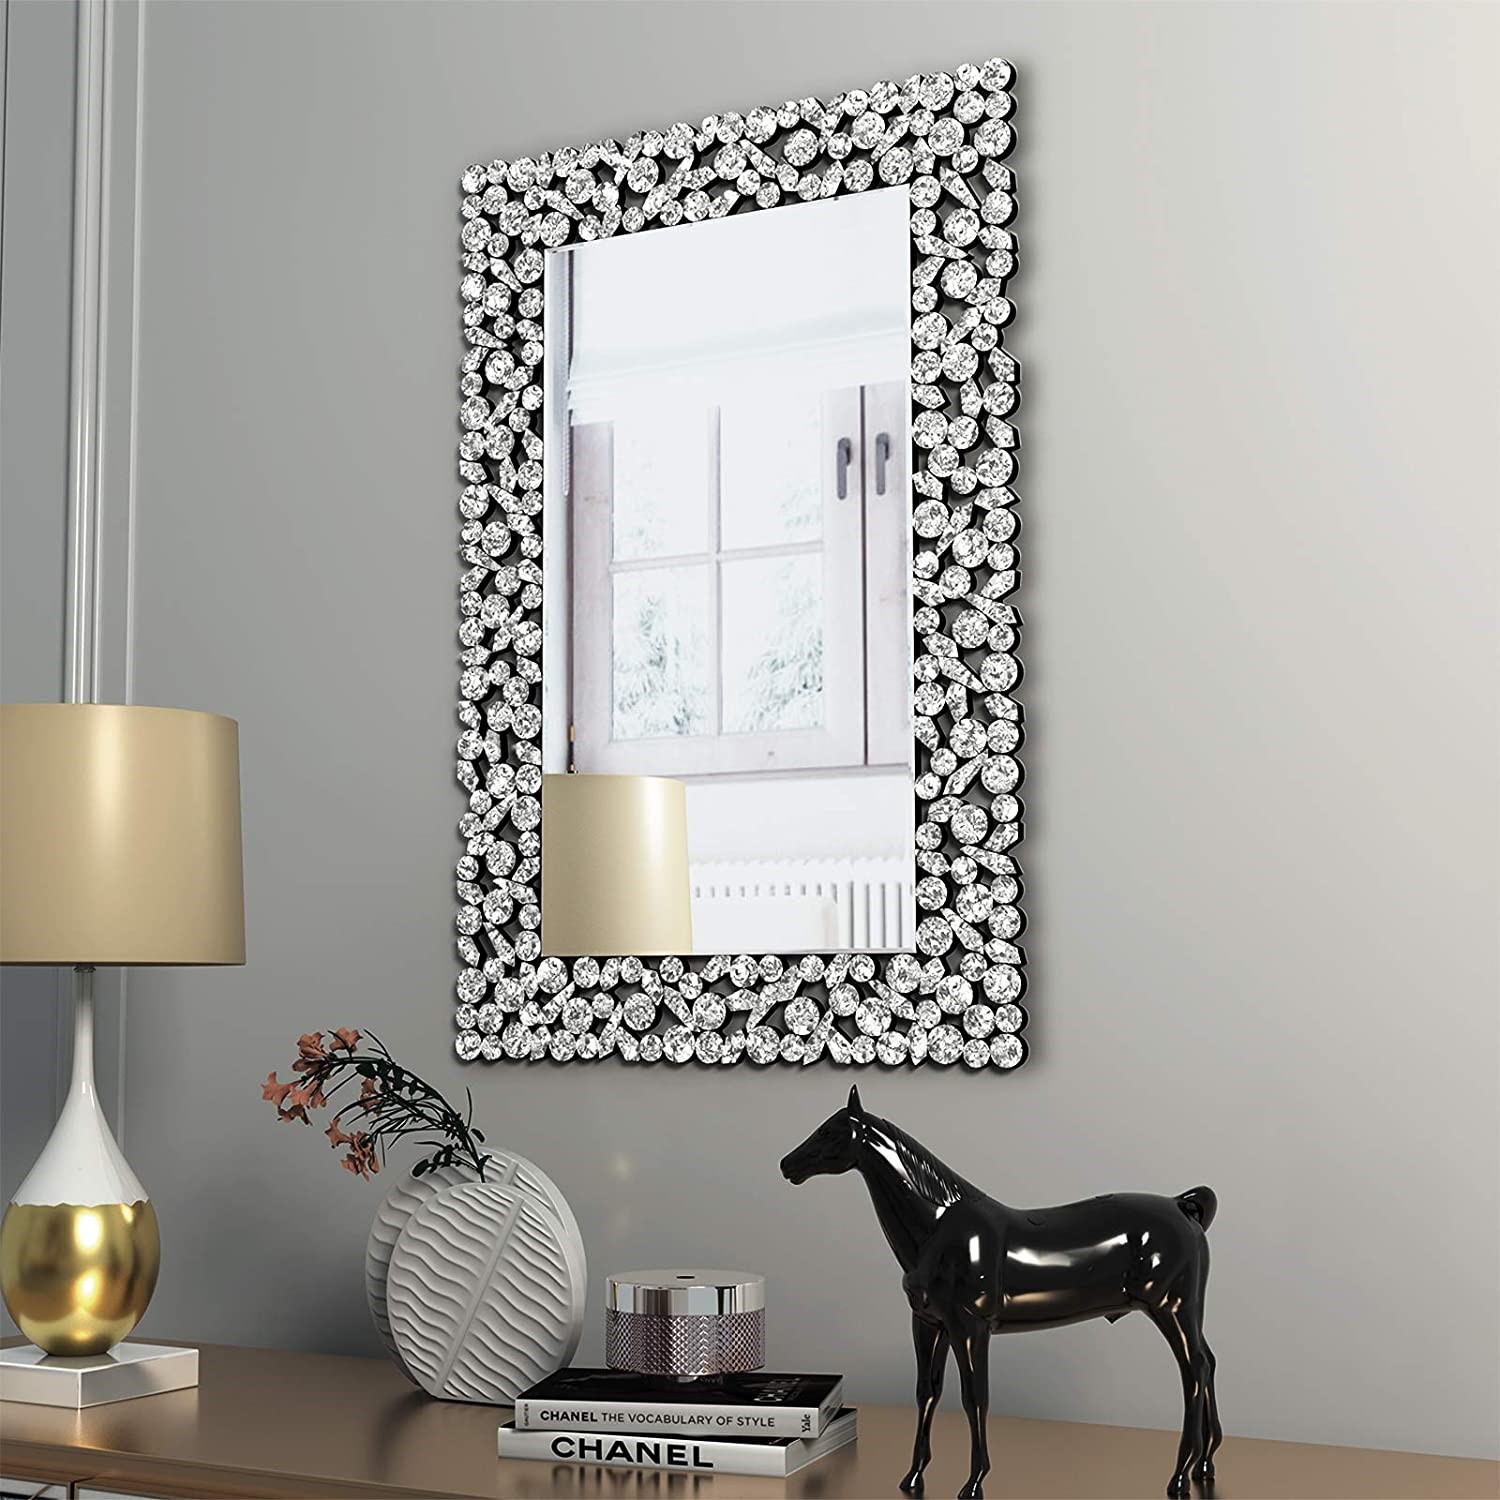 Glass decorative wall mirror, silver,23.6x35.4"